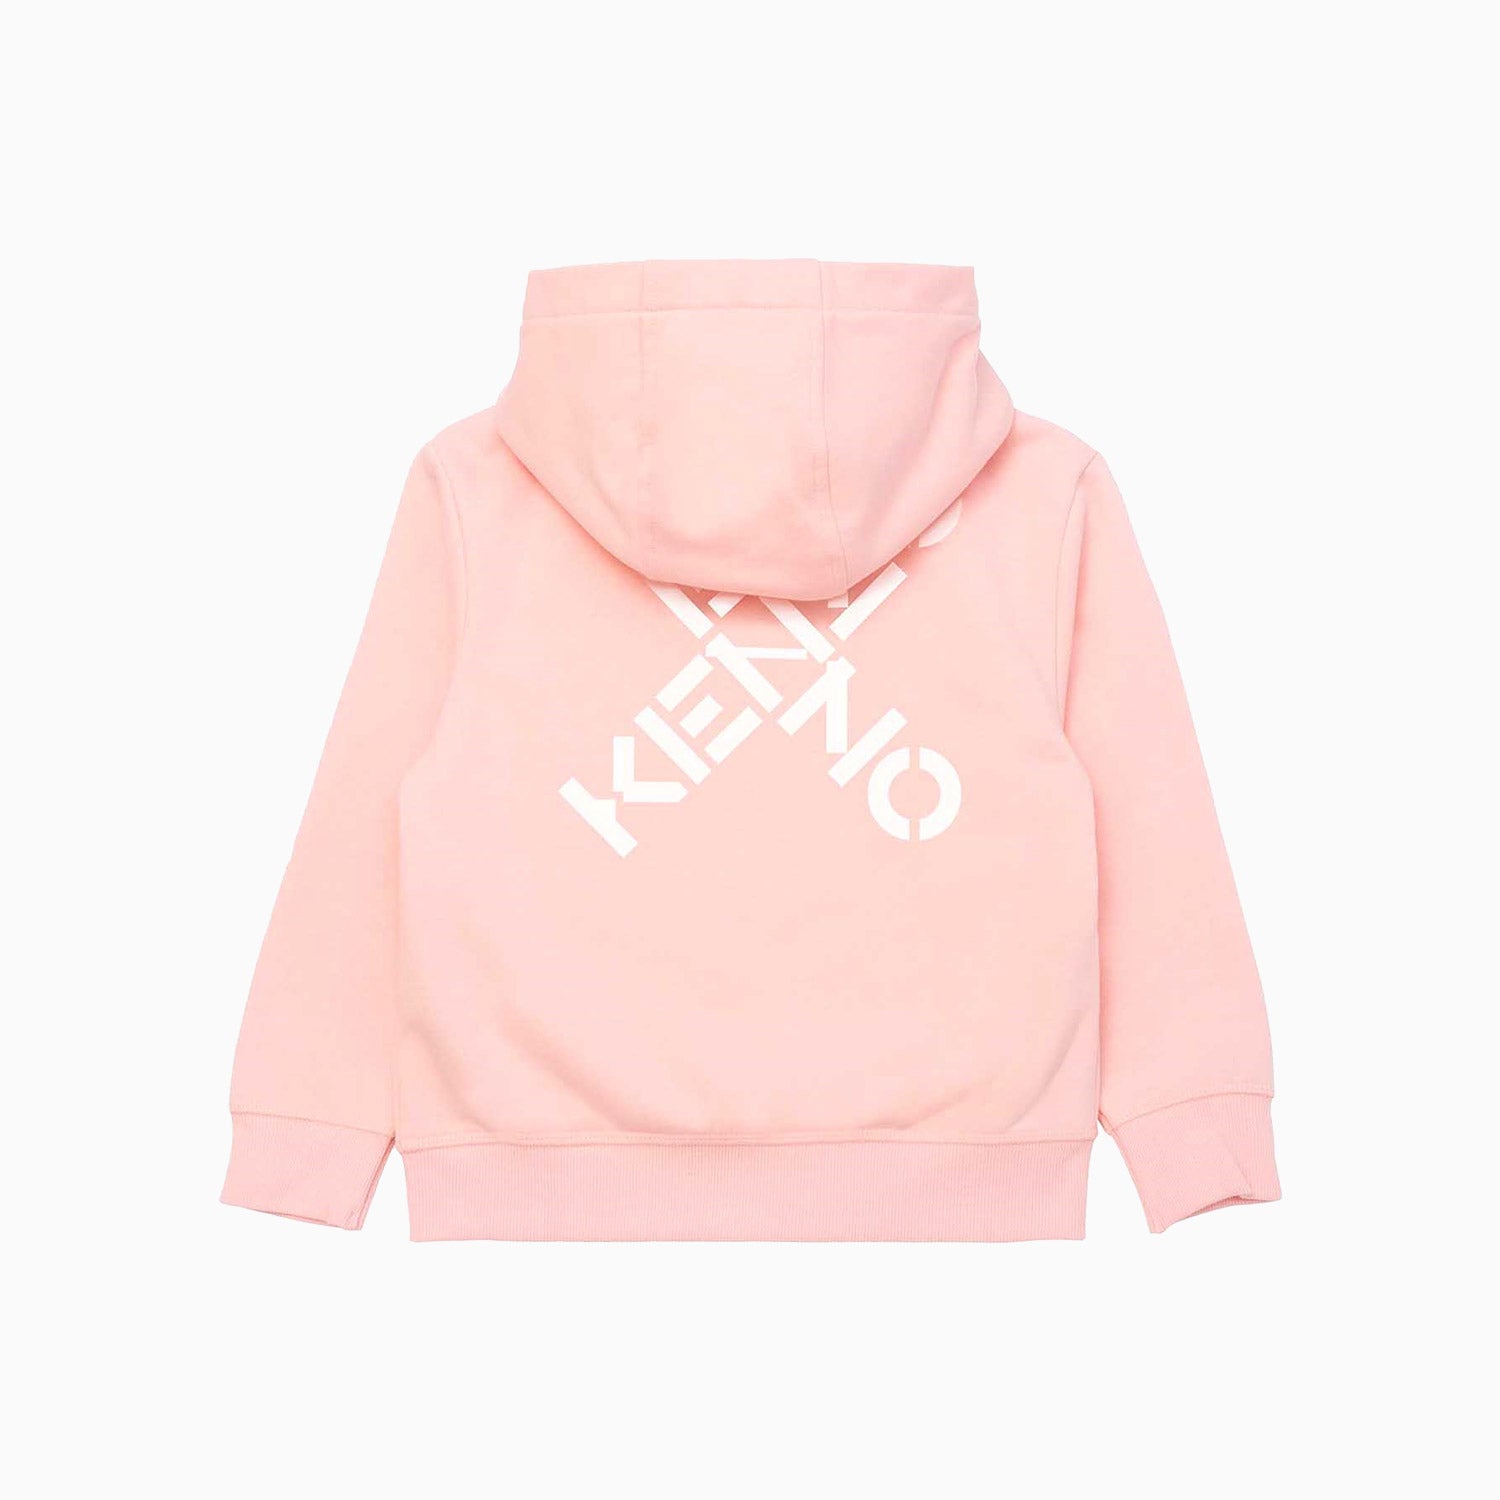 kenzo-kids-mens-cross-logo-printed-outfit-k15109-471-kids-k14056-471-kids